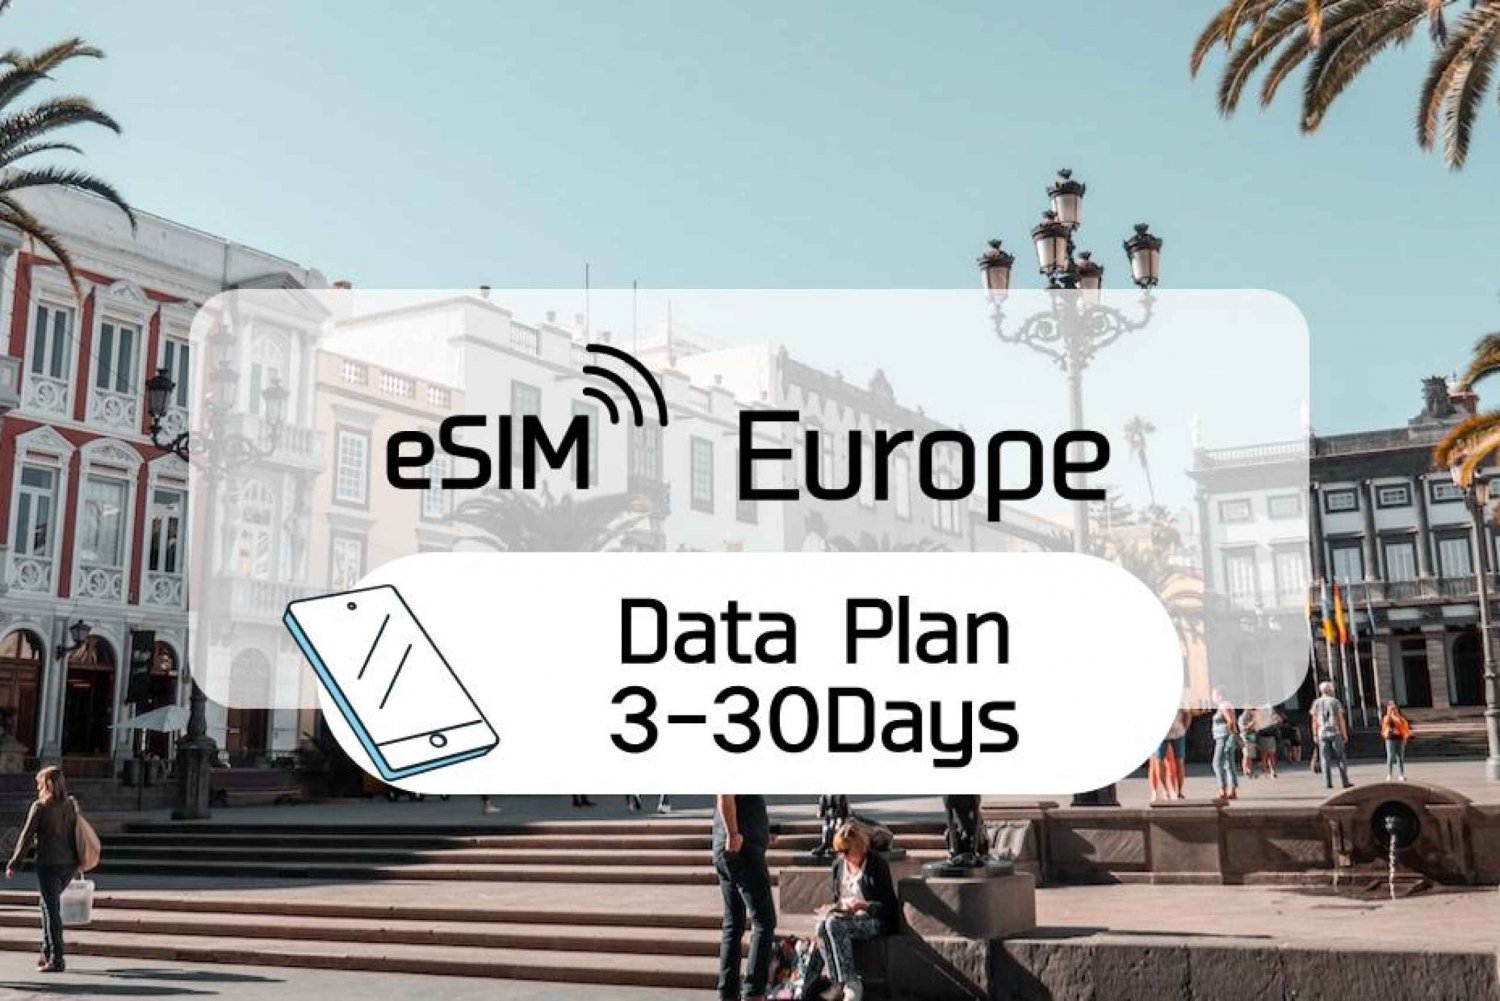 Europa: eSim Roaming Data Plan (0,5-2 GB/dag)